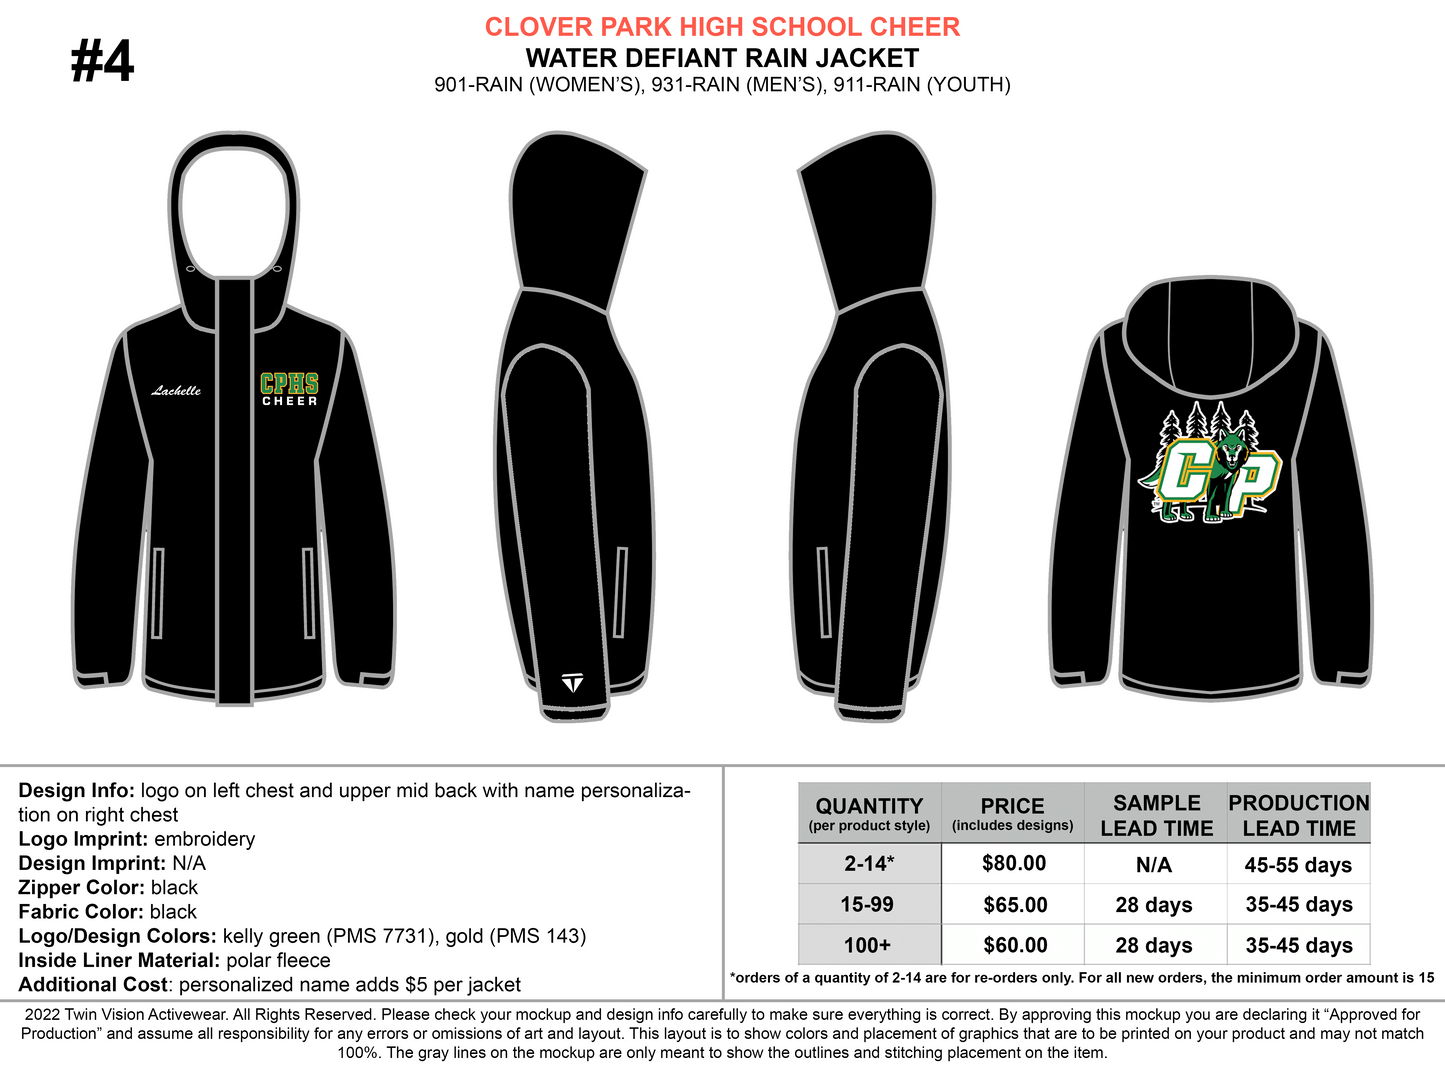 Clover Park HS Cheer Jogger Pant / Rain Jacket / Revolutionary Jacket Package